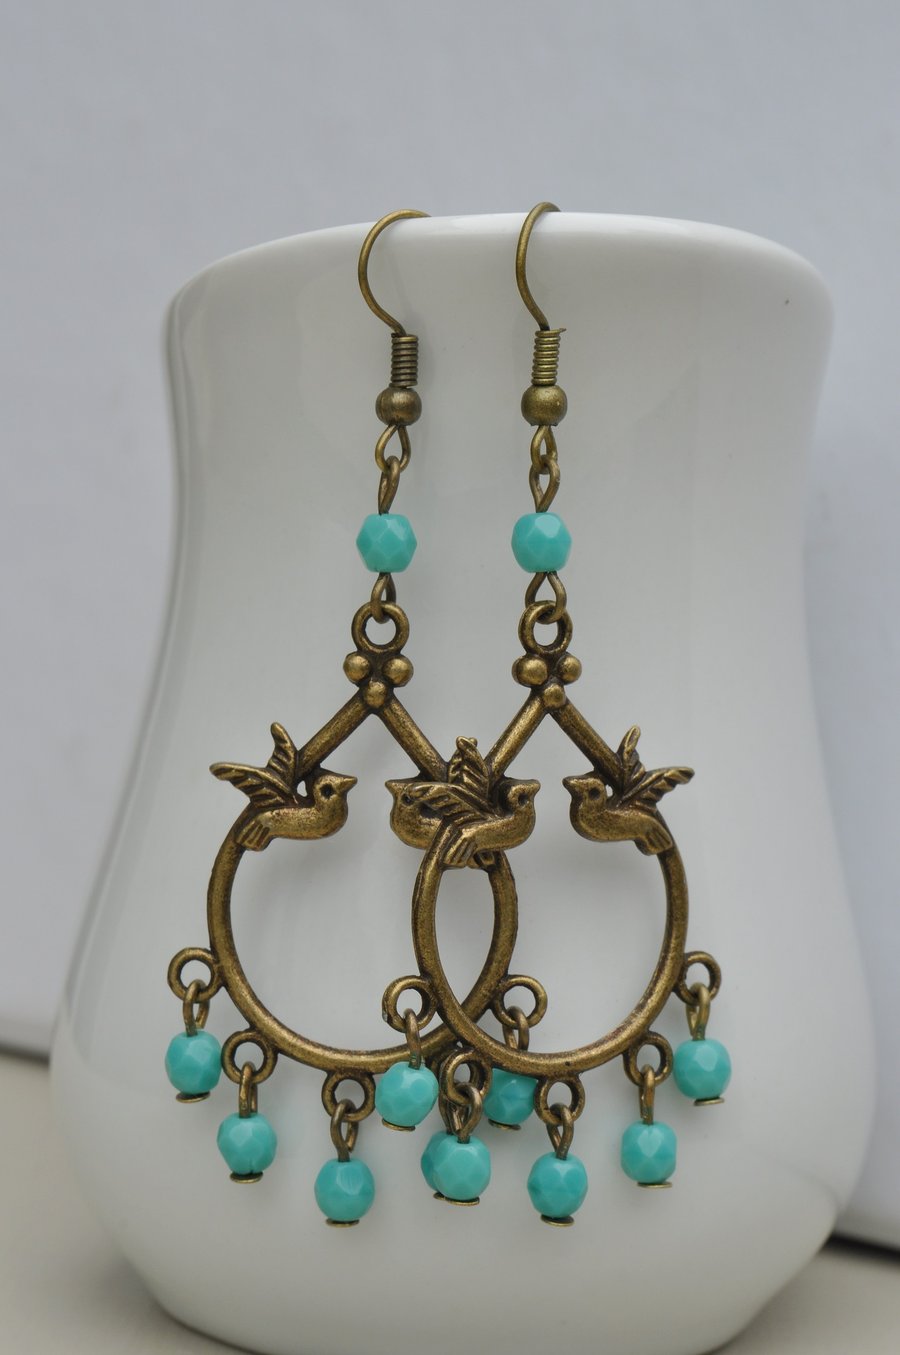 Wings of Love Chandelier Bird Earrings with Czech turquoise beads